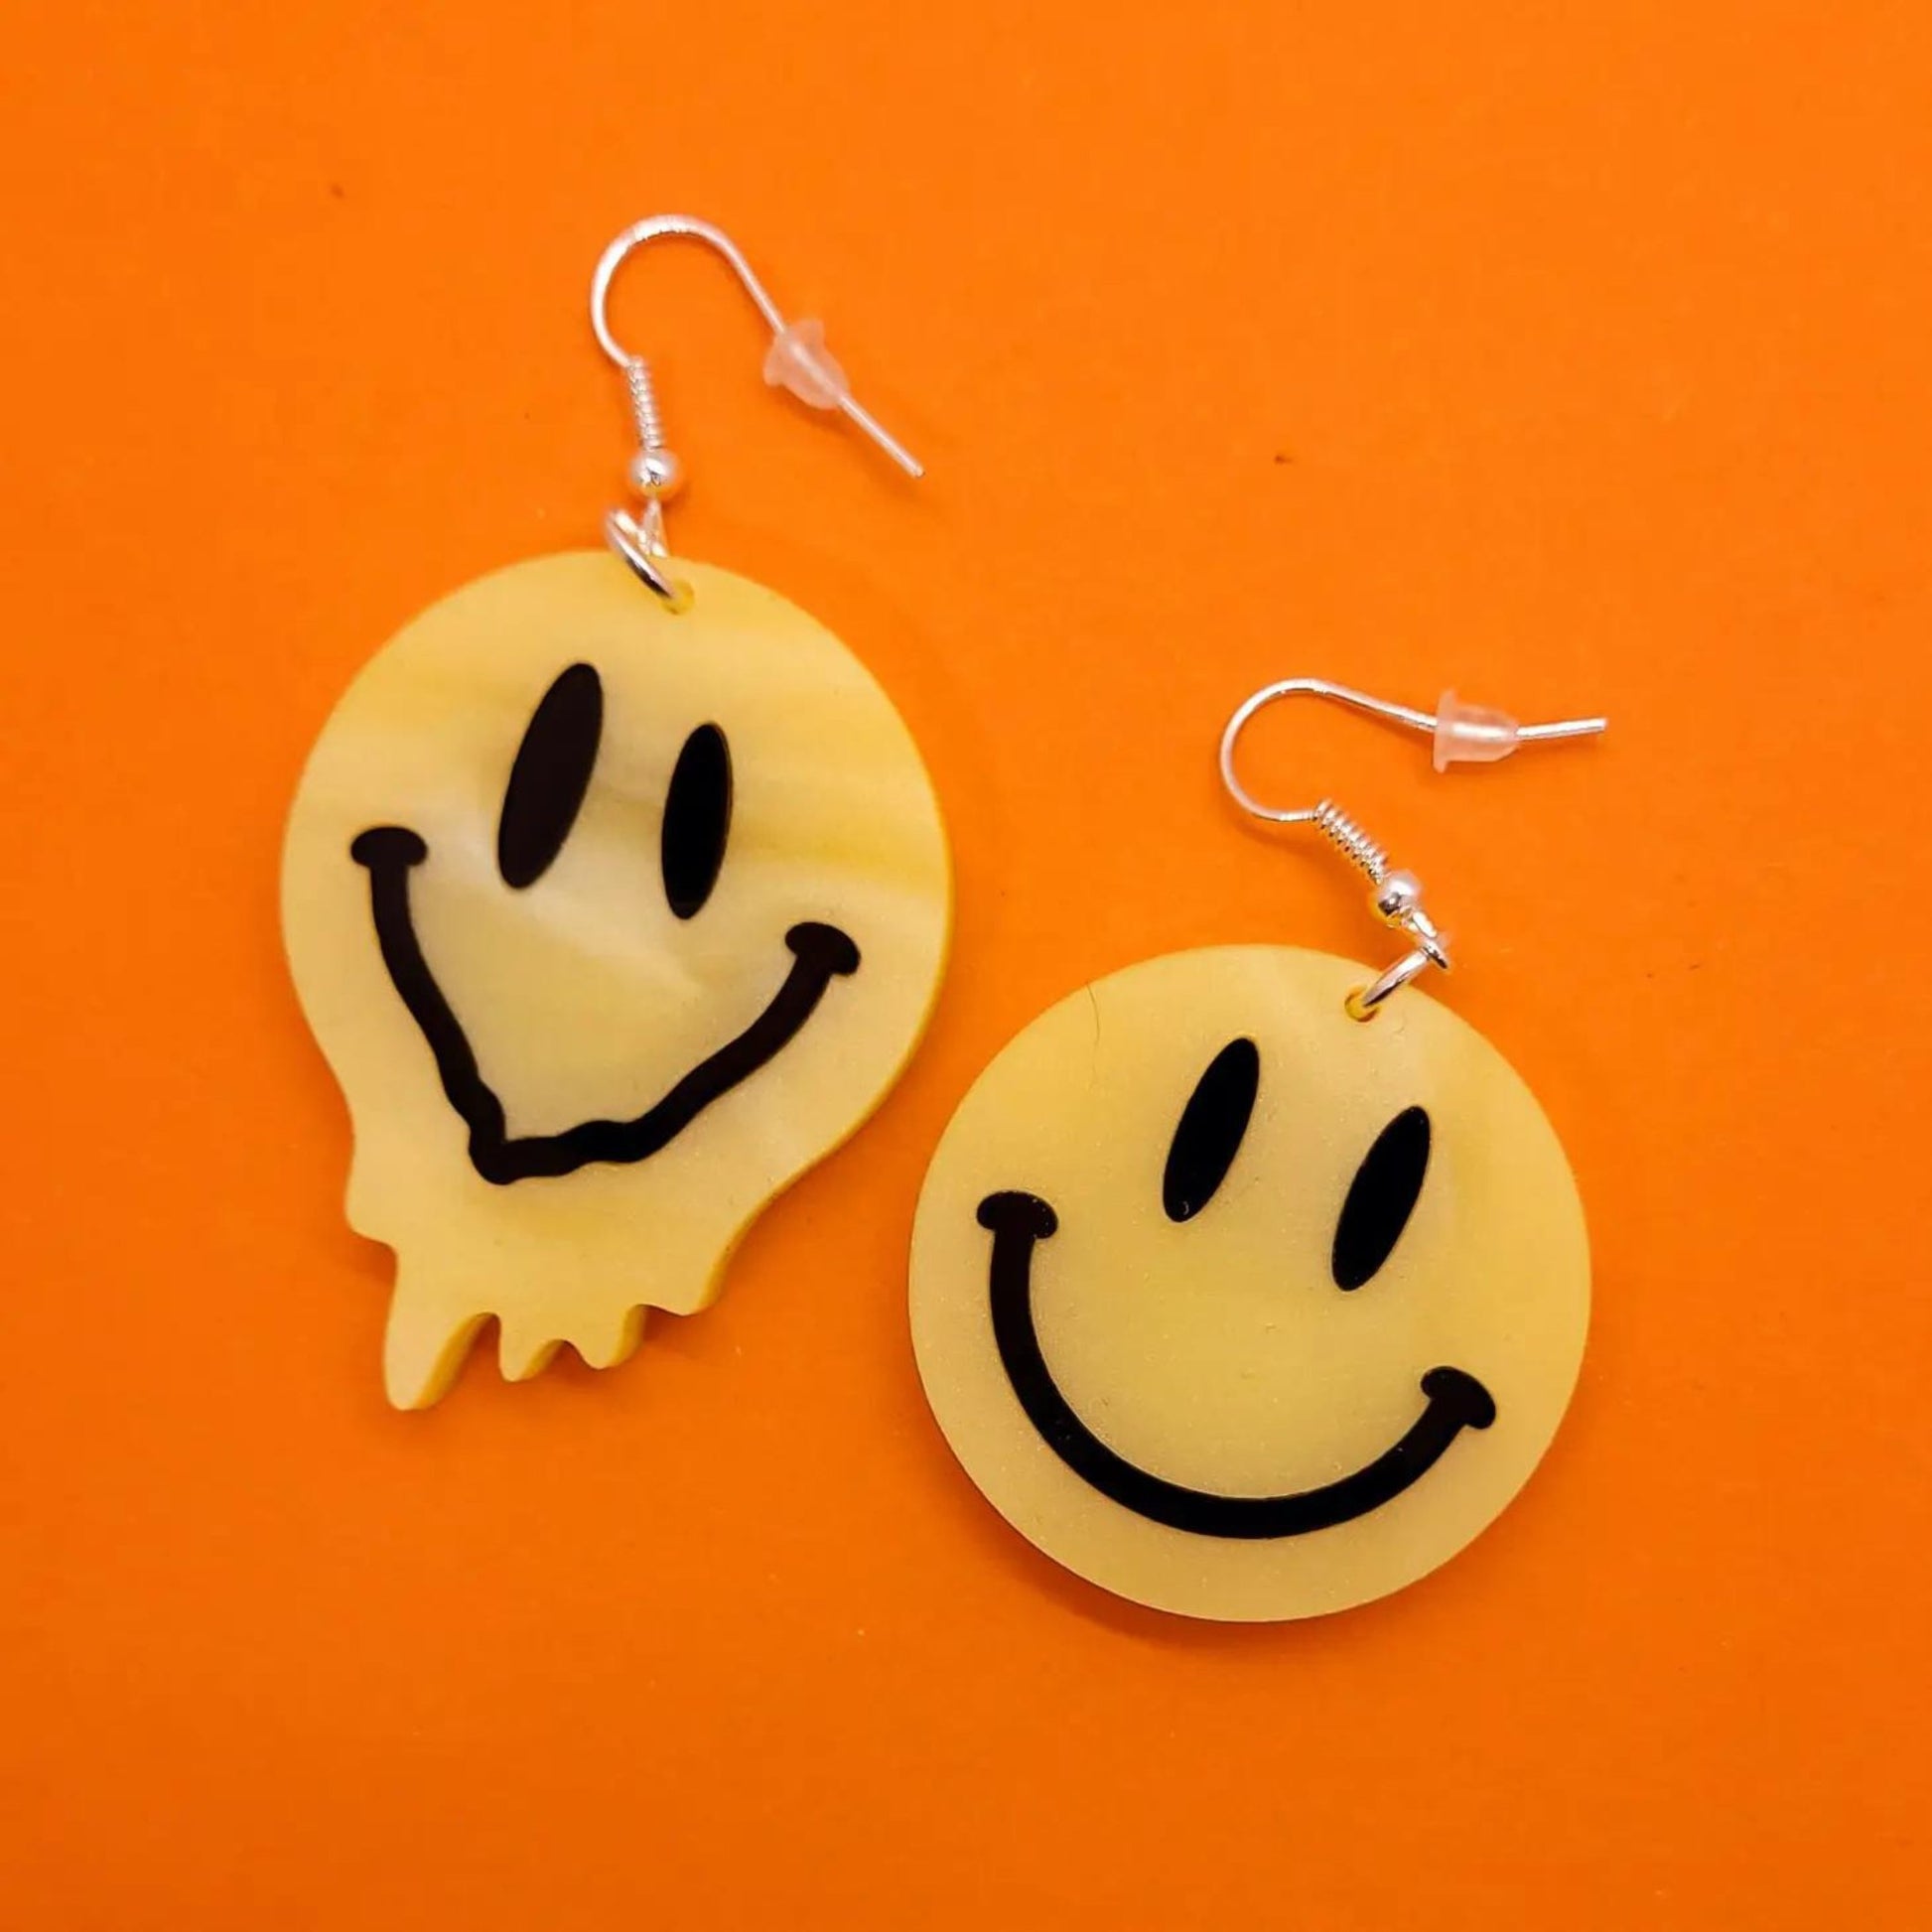 Smiley Face Earrings - The Little Jewellery Company